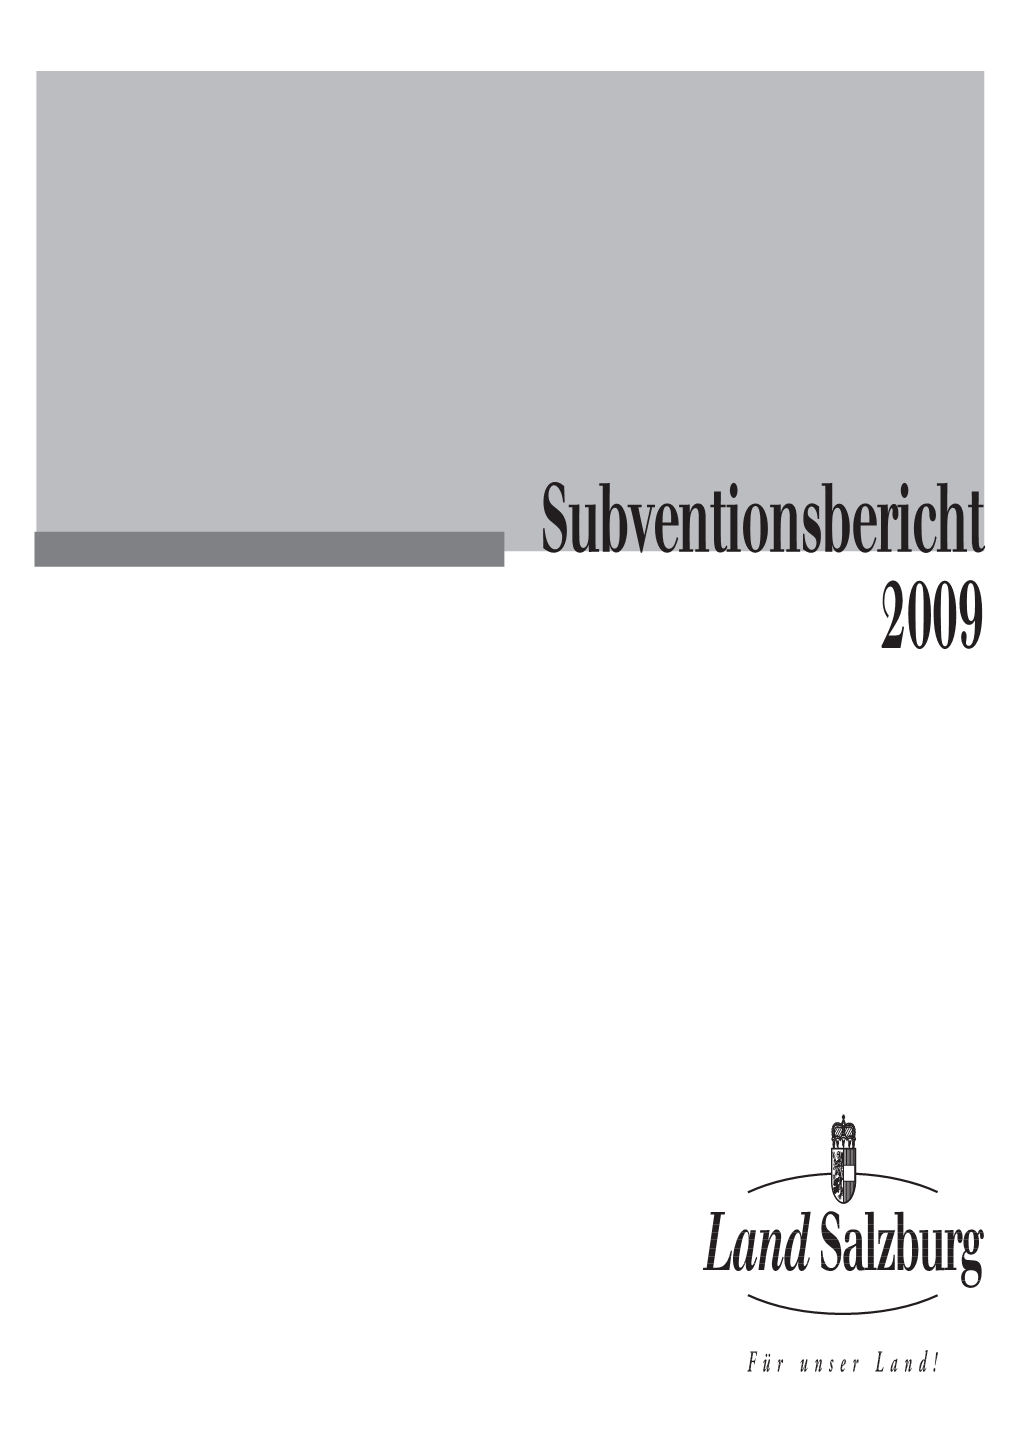 Subventionsbericht 2009